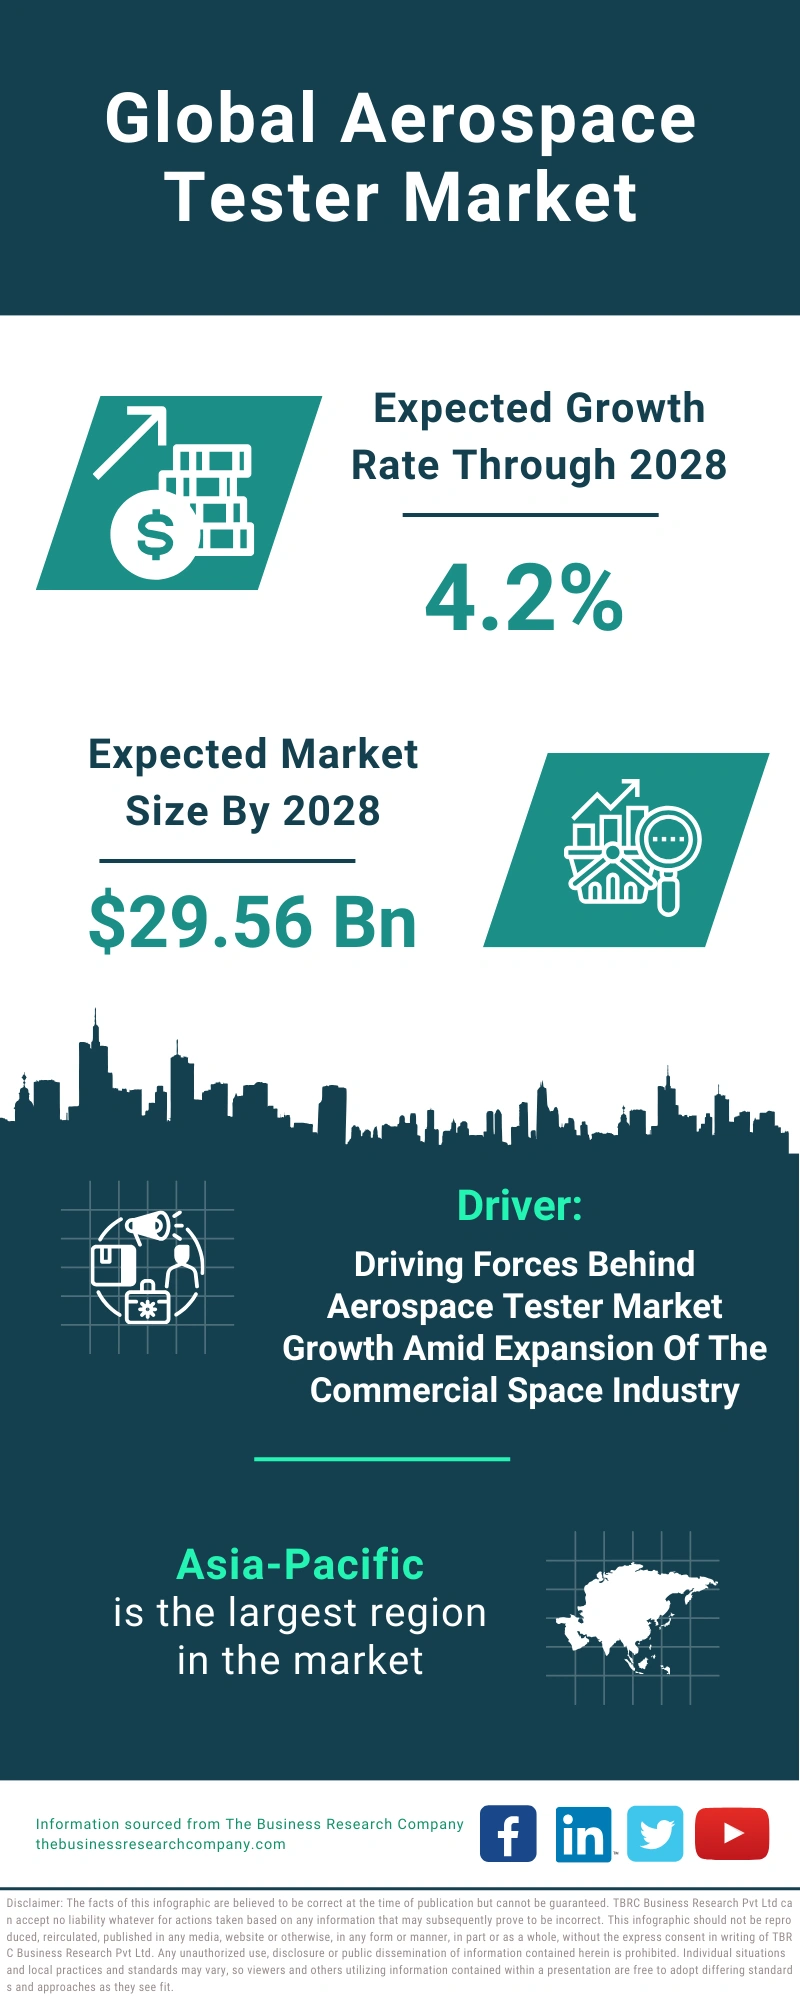 Aerospace Tester Global Market Report 2024